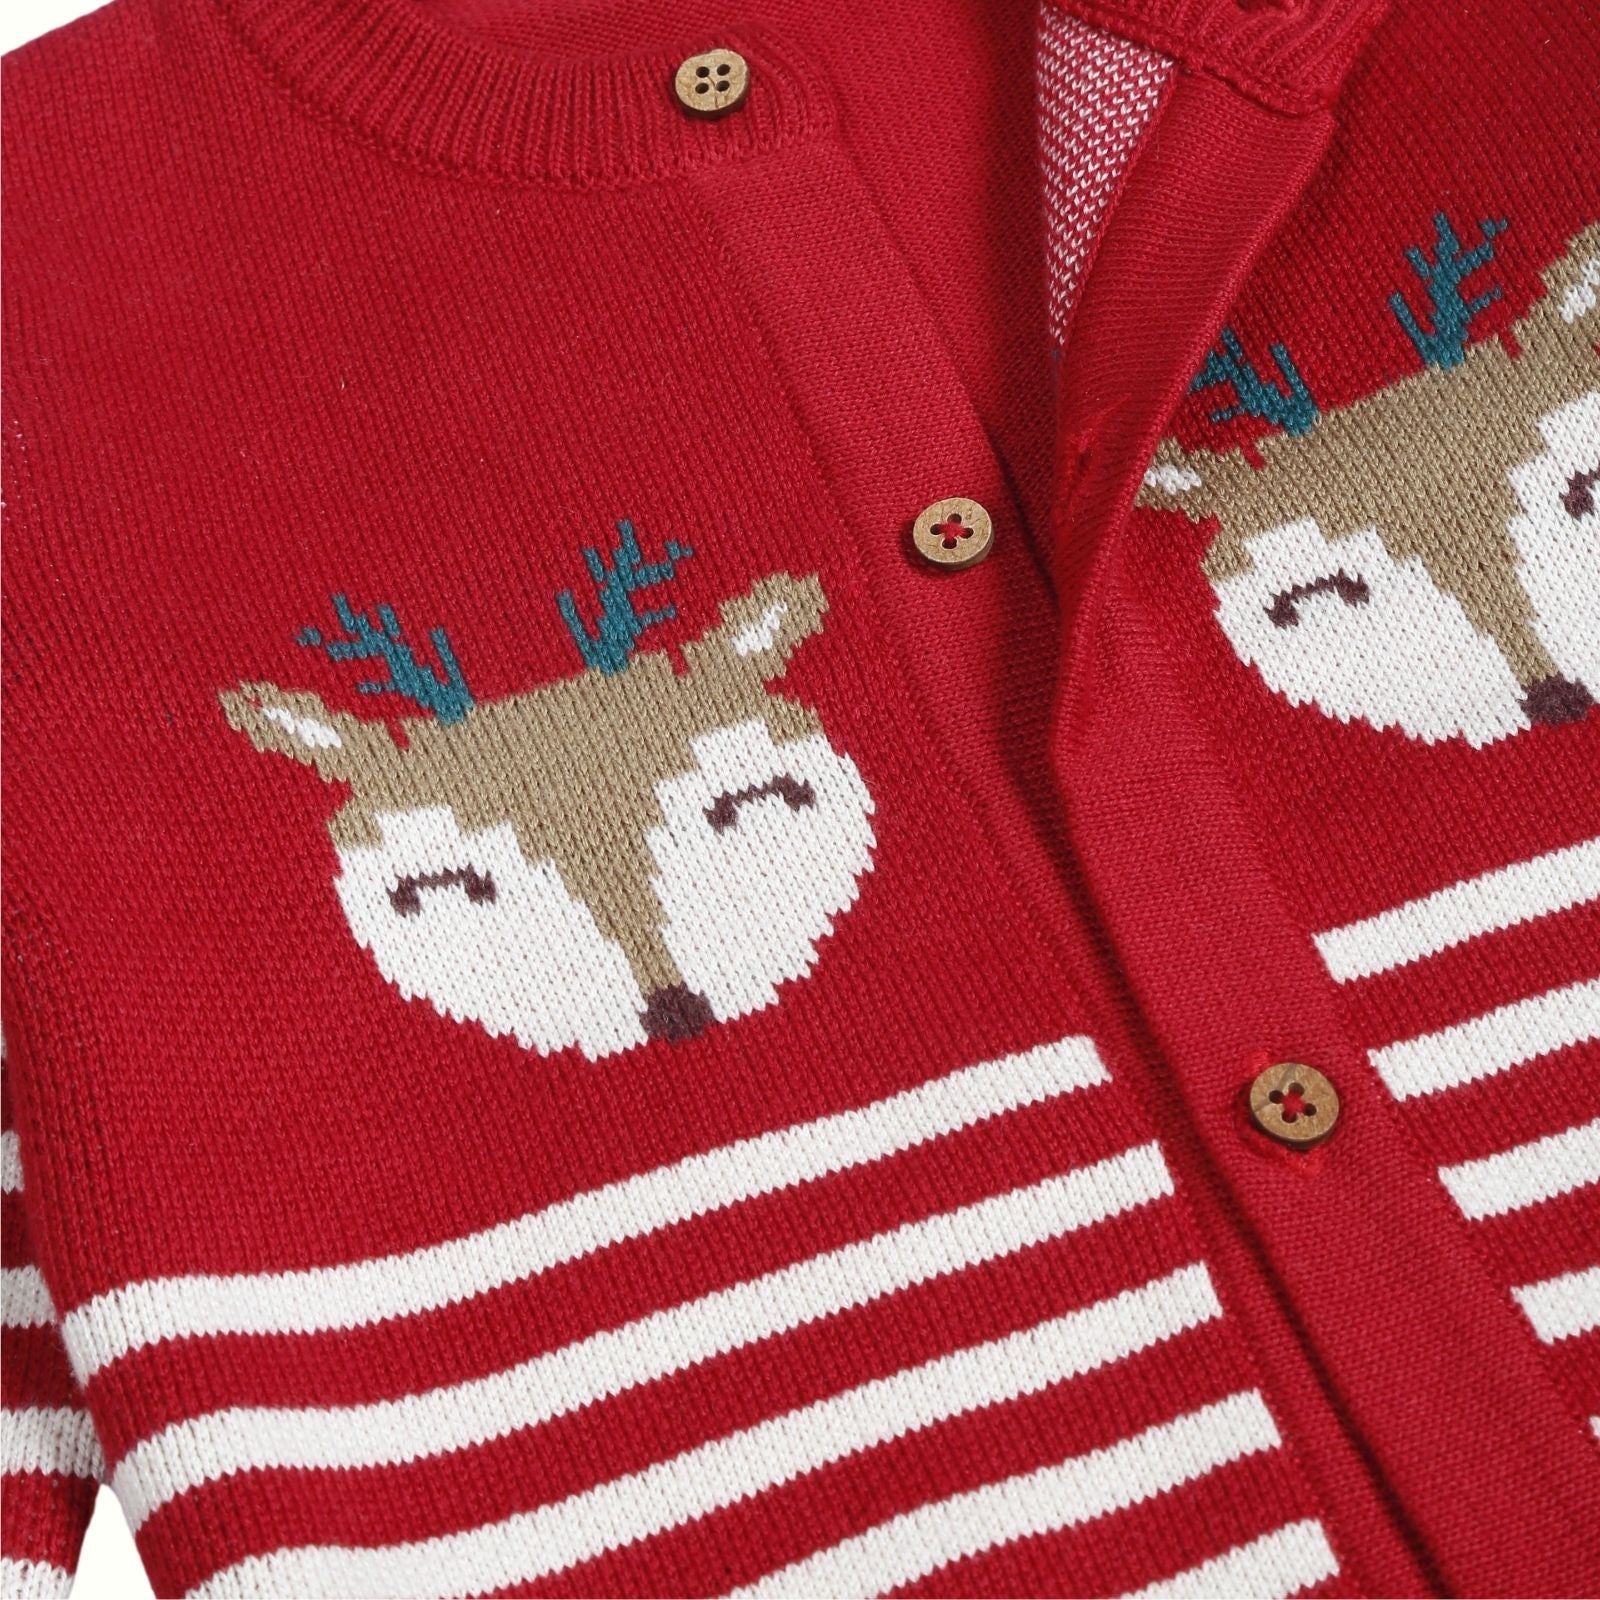 Greendeer Jaunty Reindeer, Joyful Reindeer & Hearth Warming Bear 100% Cotton Sweater with Lower Set of 4